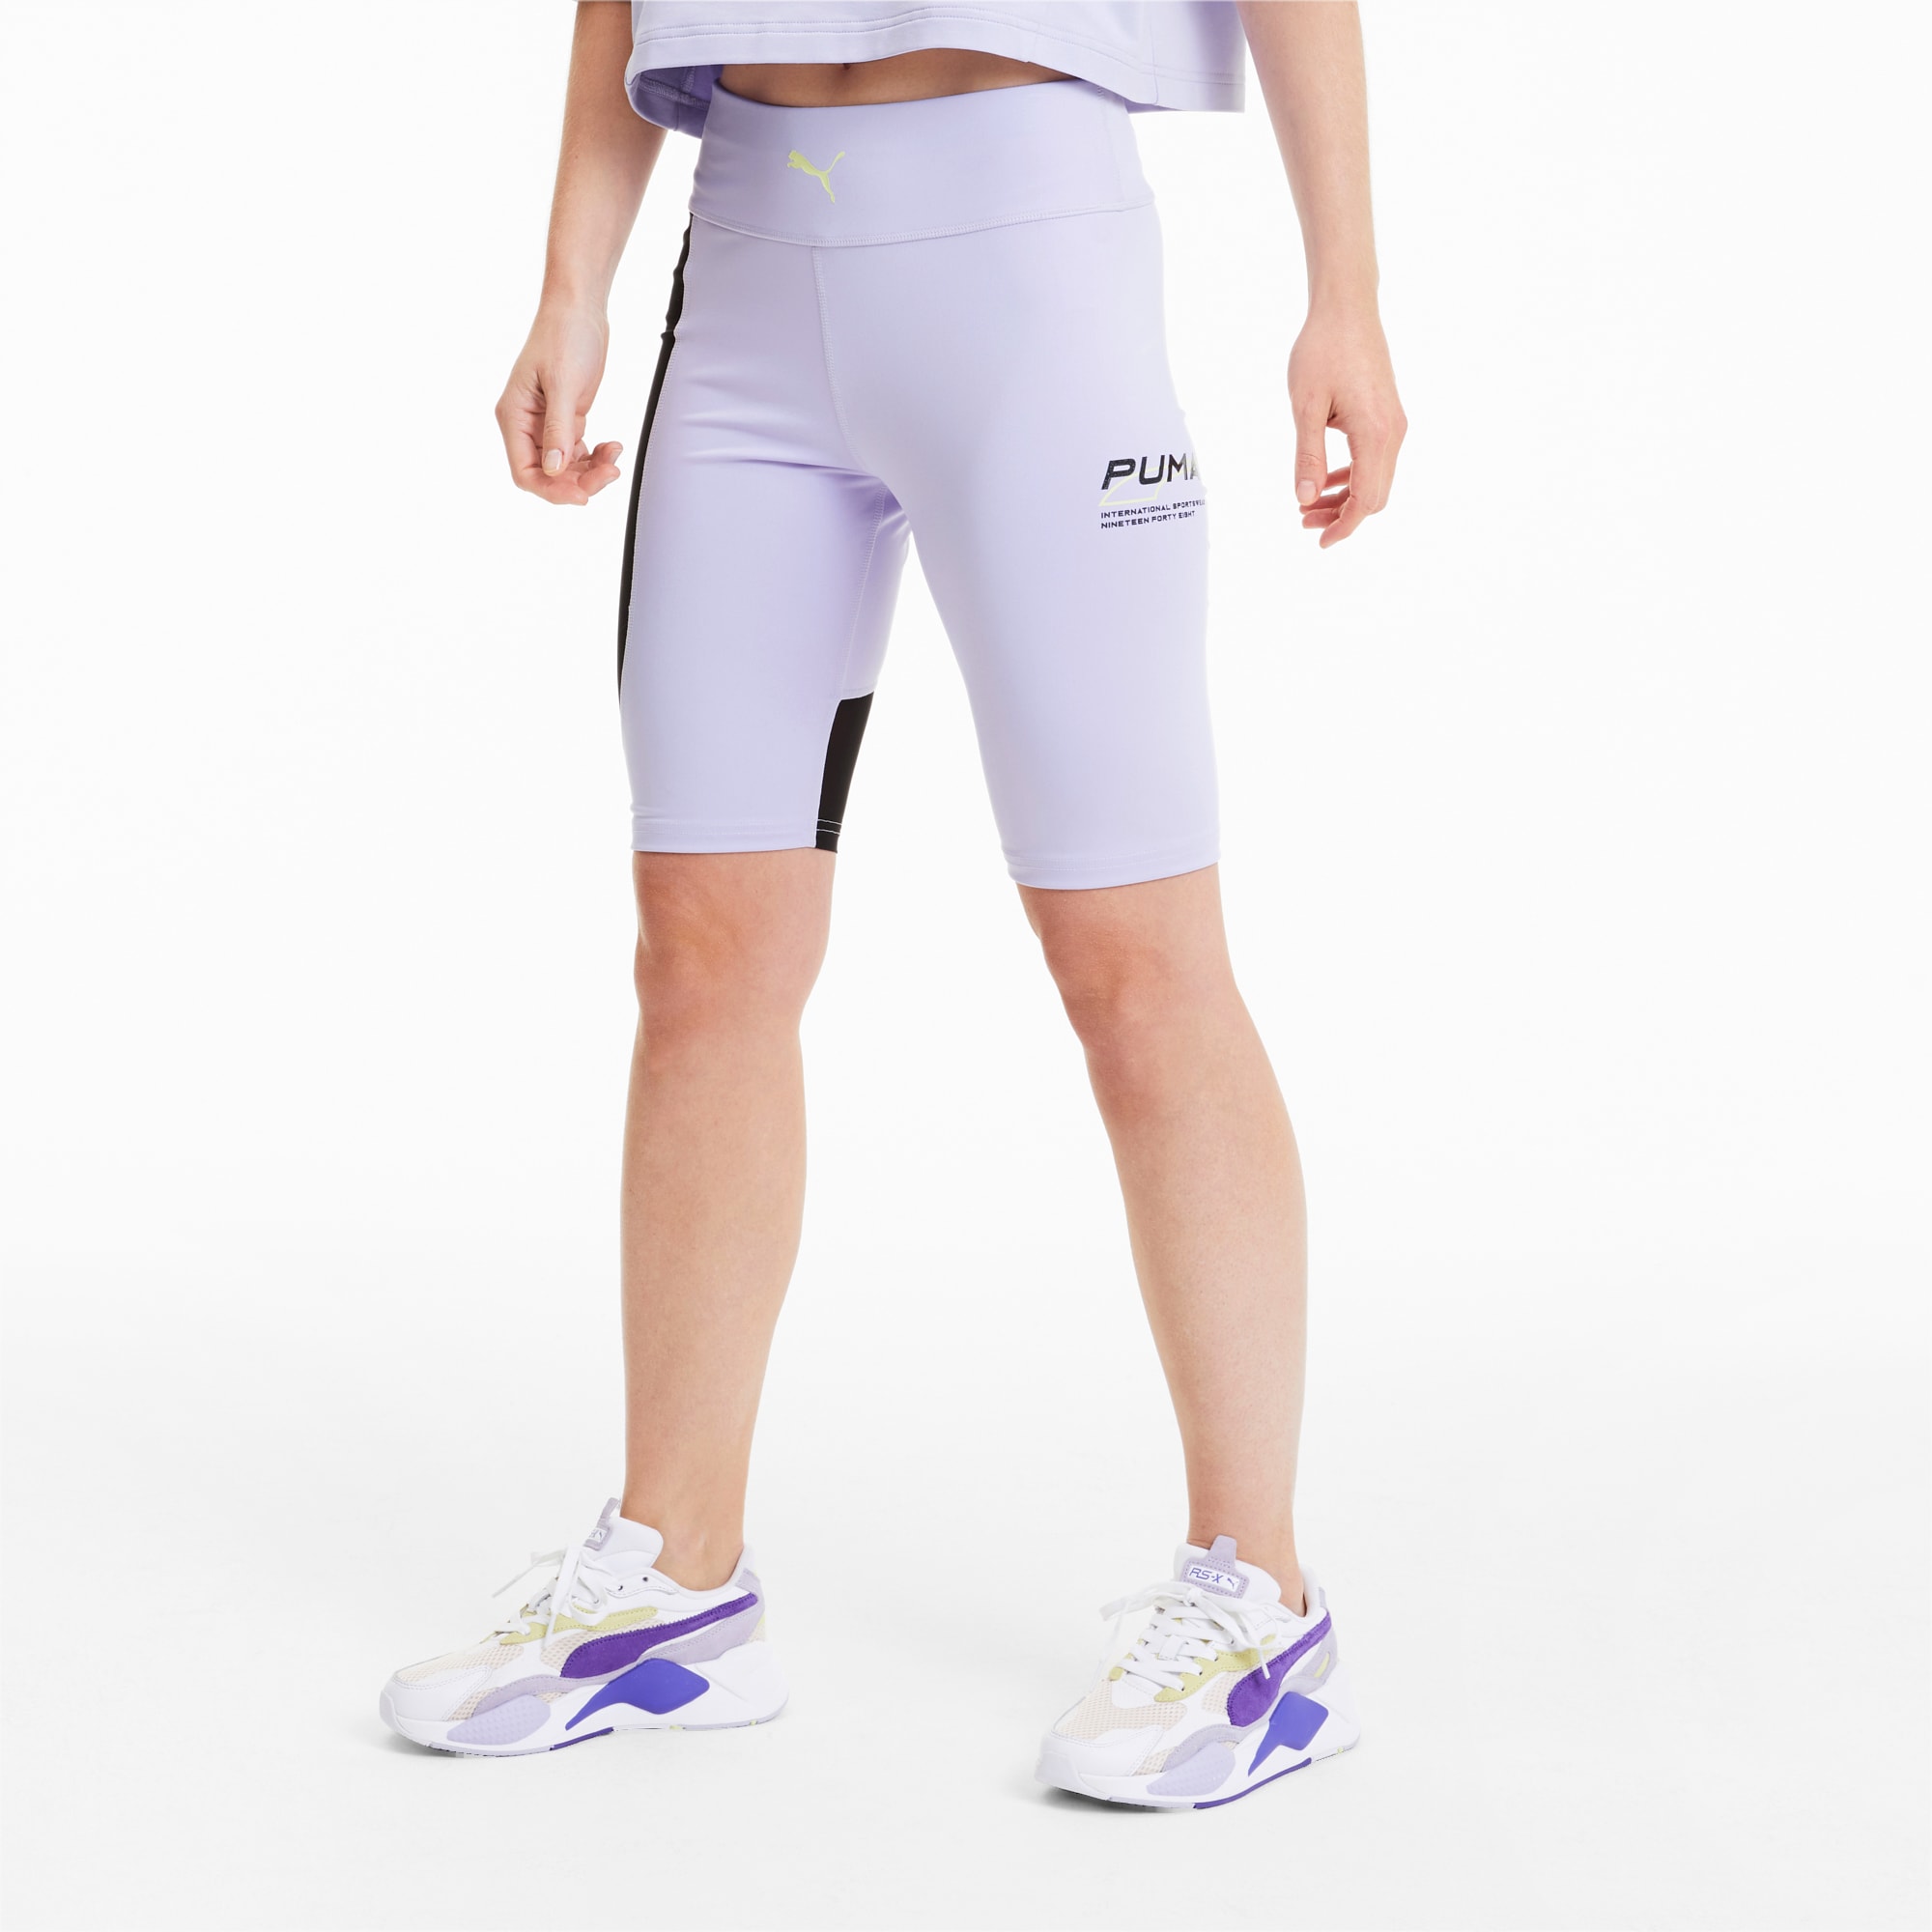 purple high waisted shorts